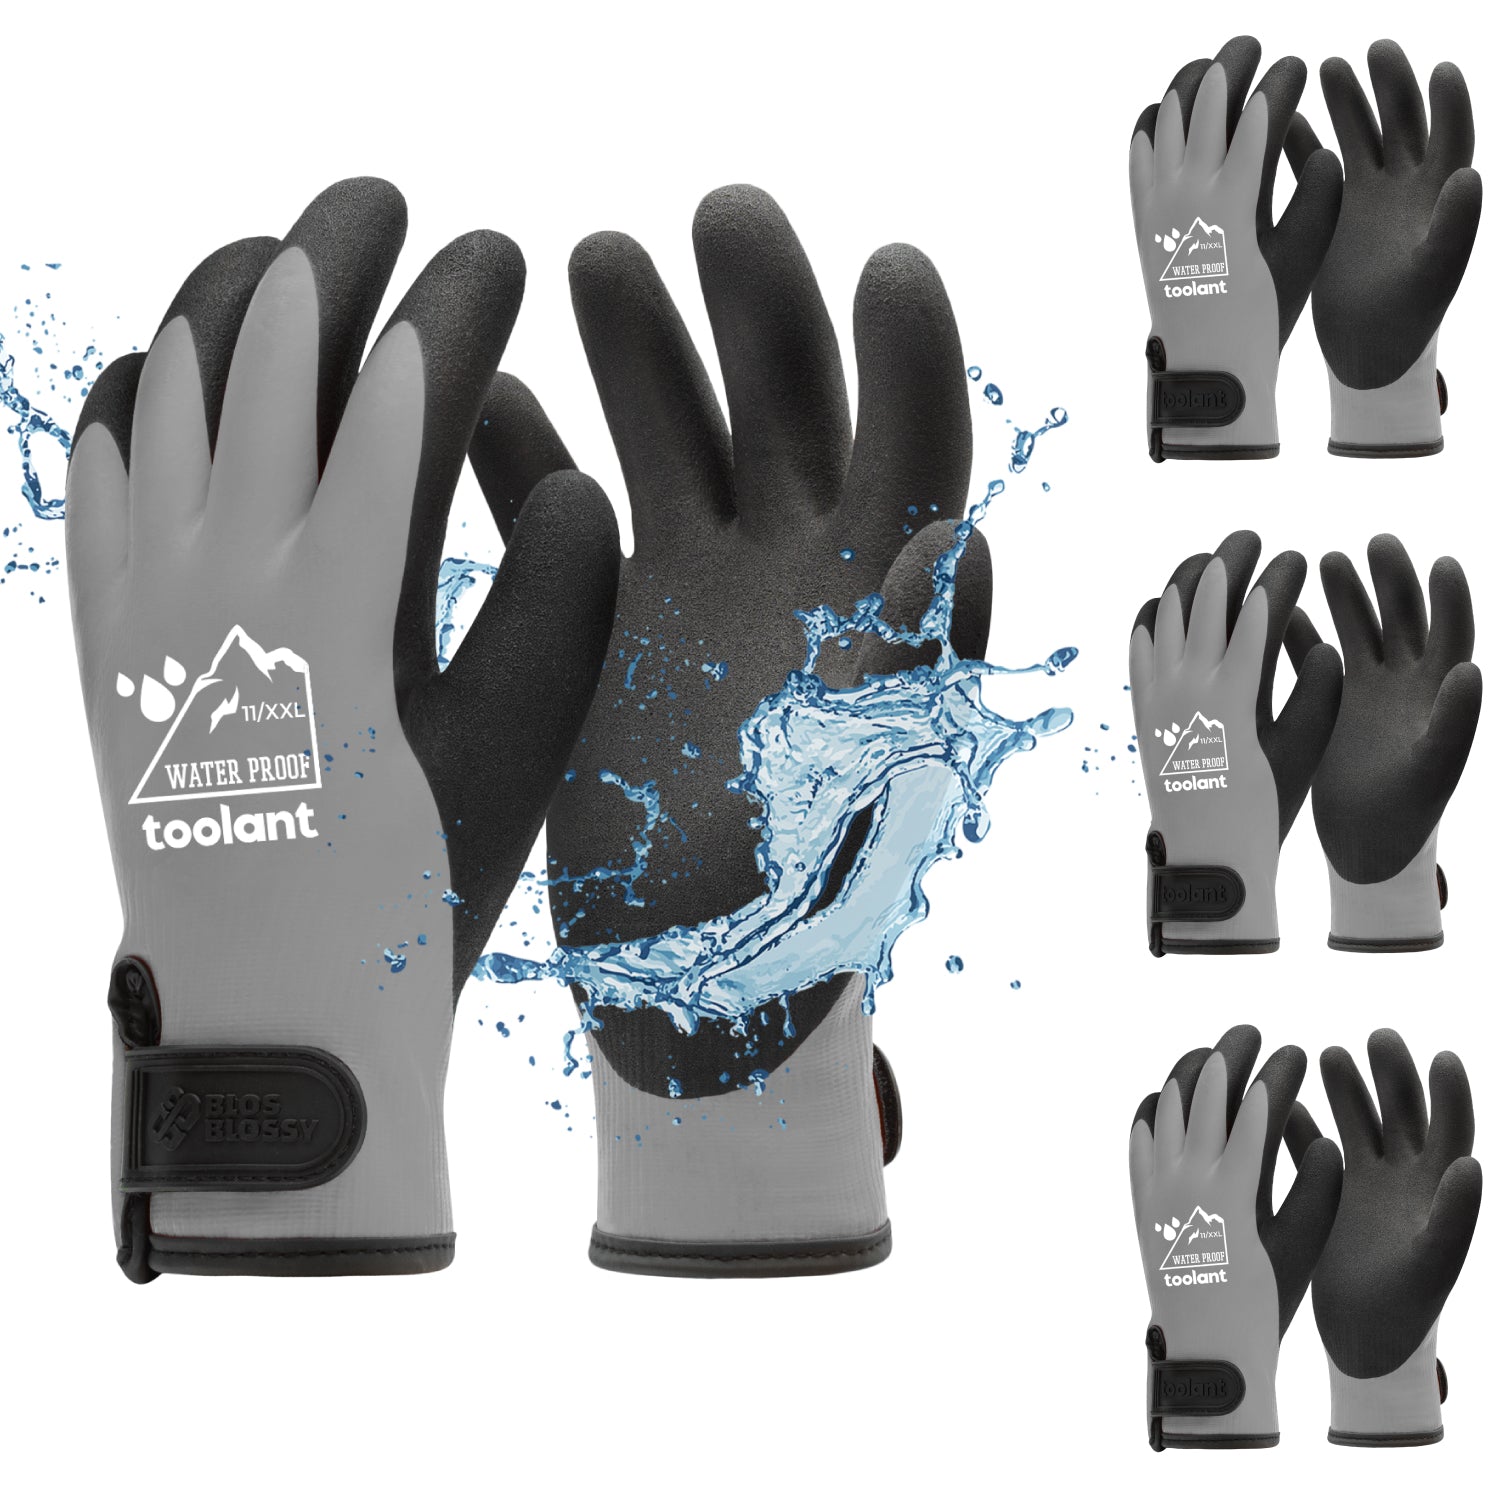 Winter Protective Work Waterproof Freezer Gloves ToolAnt, 59% OFF